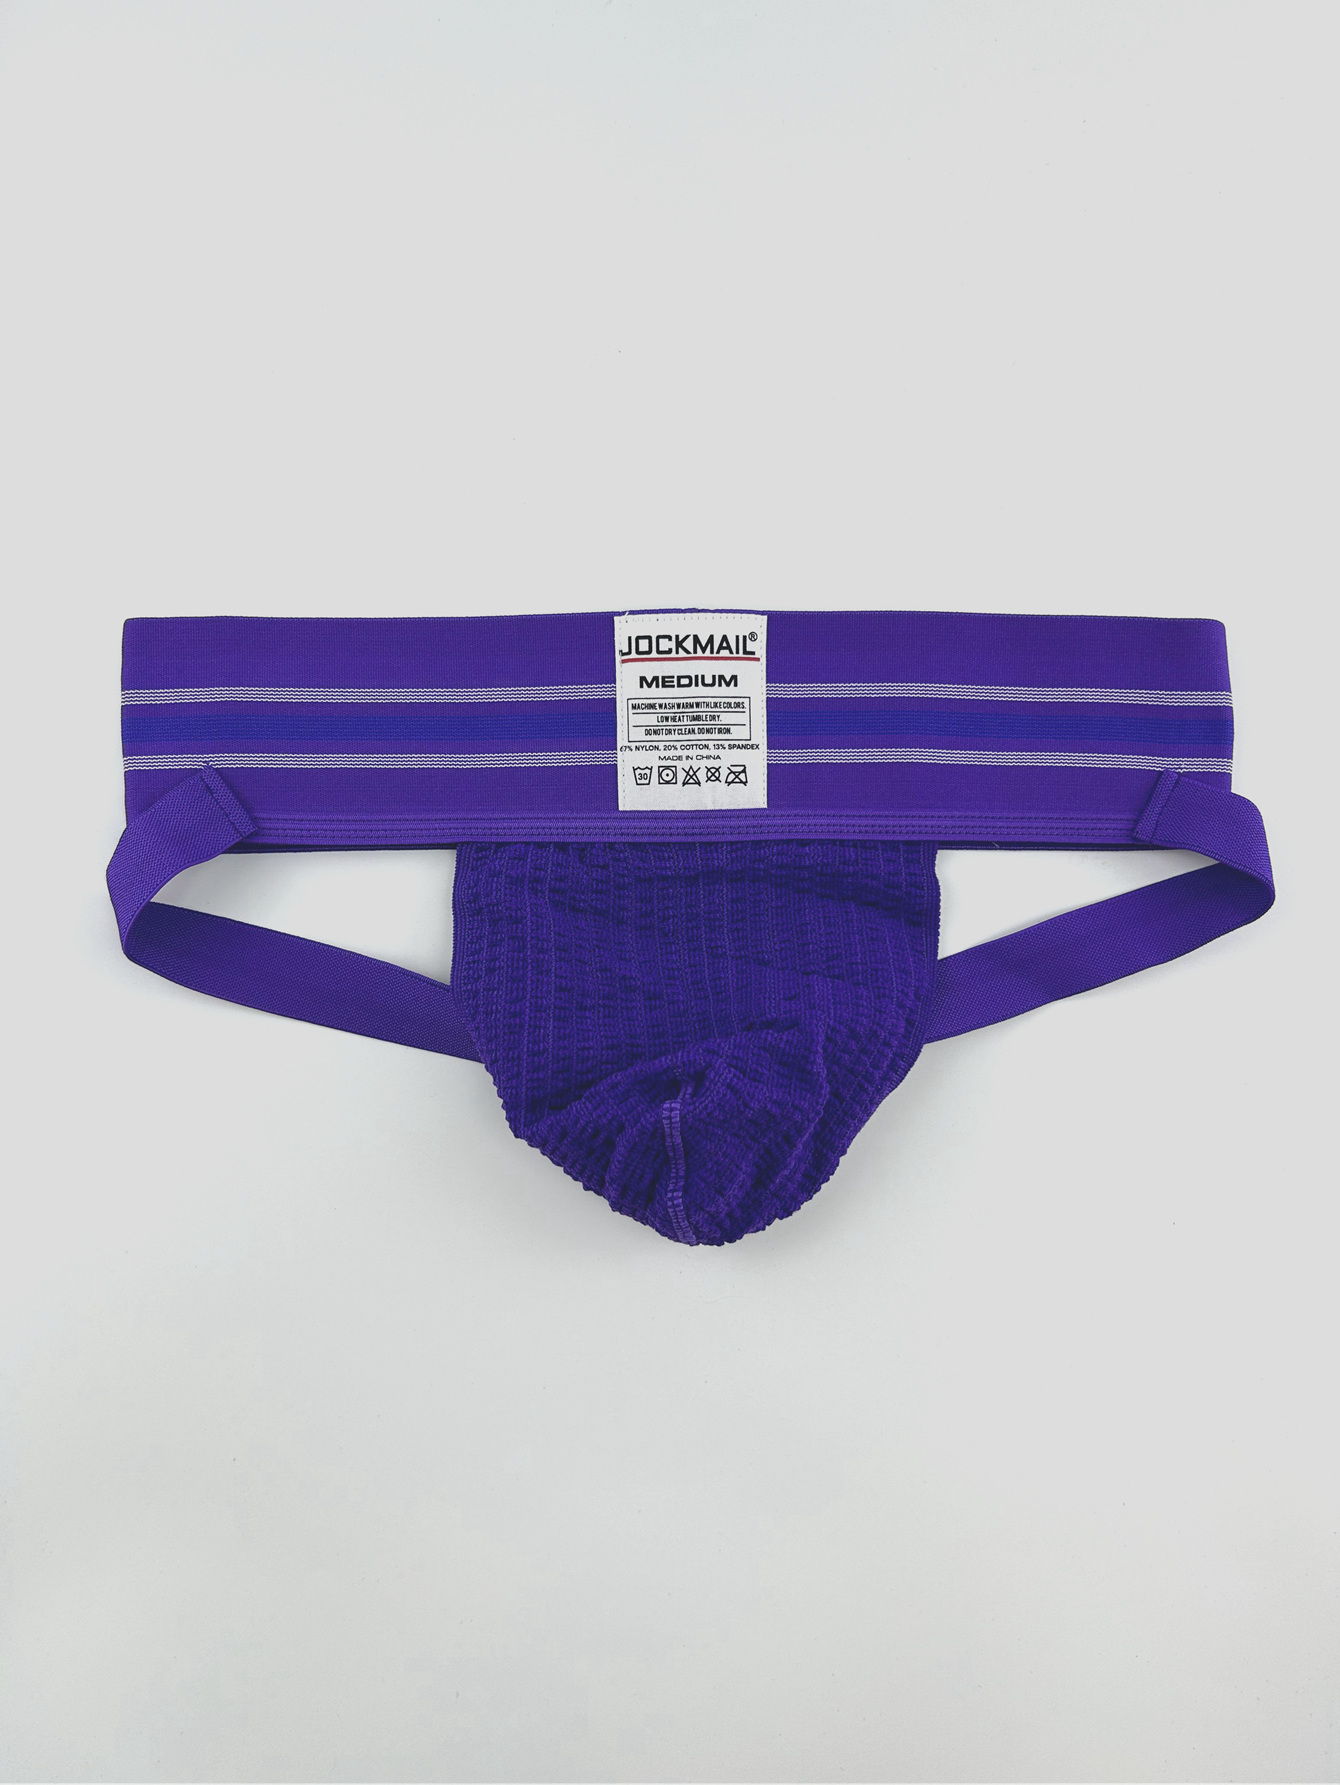 JOCKMAIL Jockstrap Men Underwear String Thong Men Underwear Gay Panties Men  Briefs Thong (M, Blue) at  Men's Clothing store